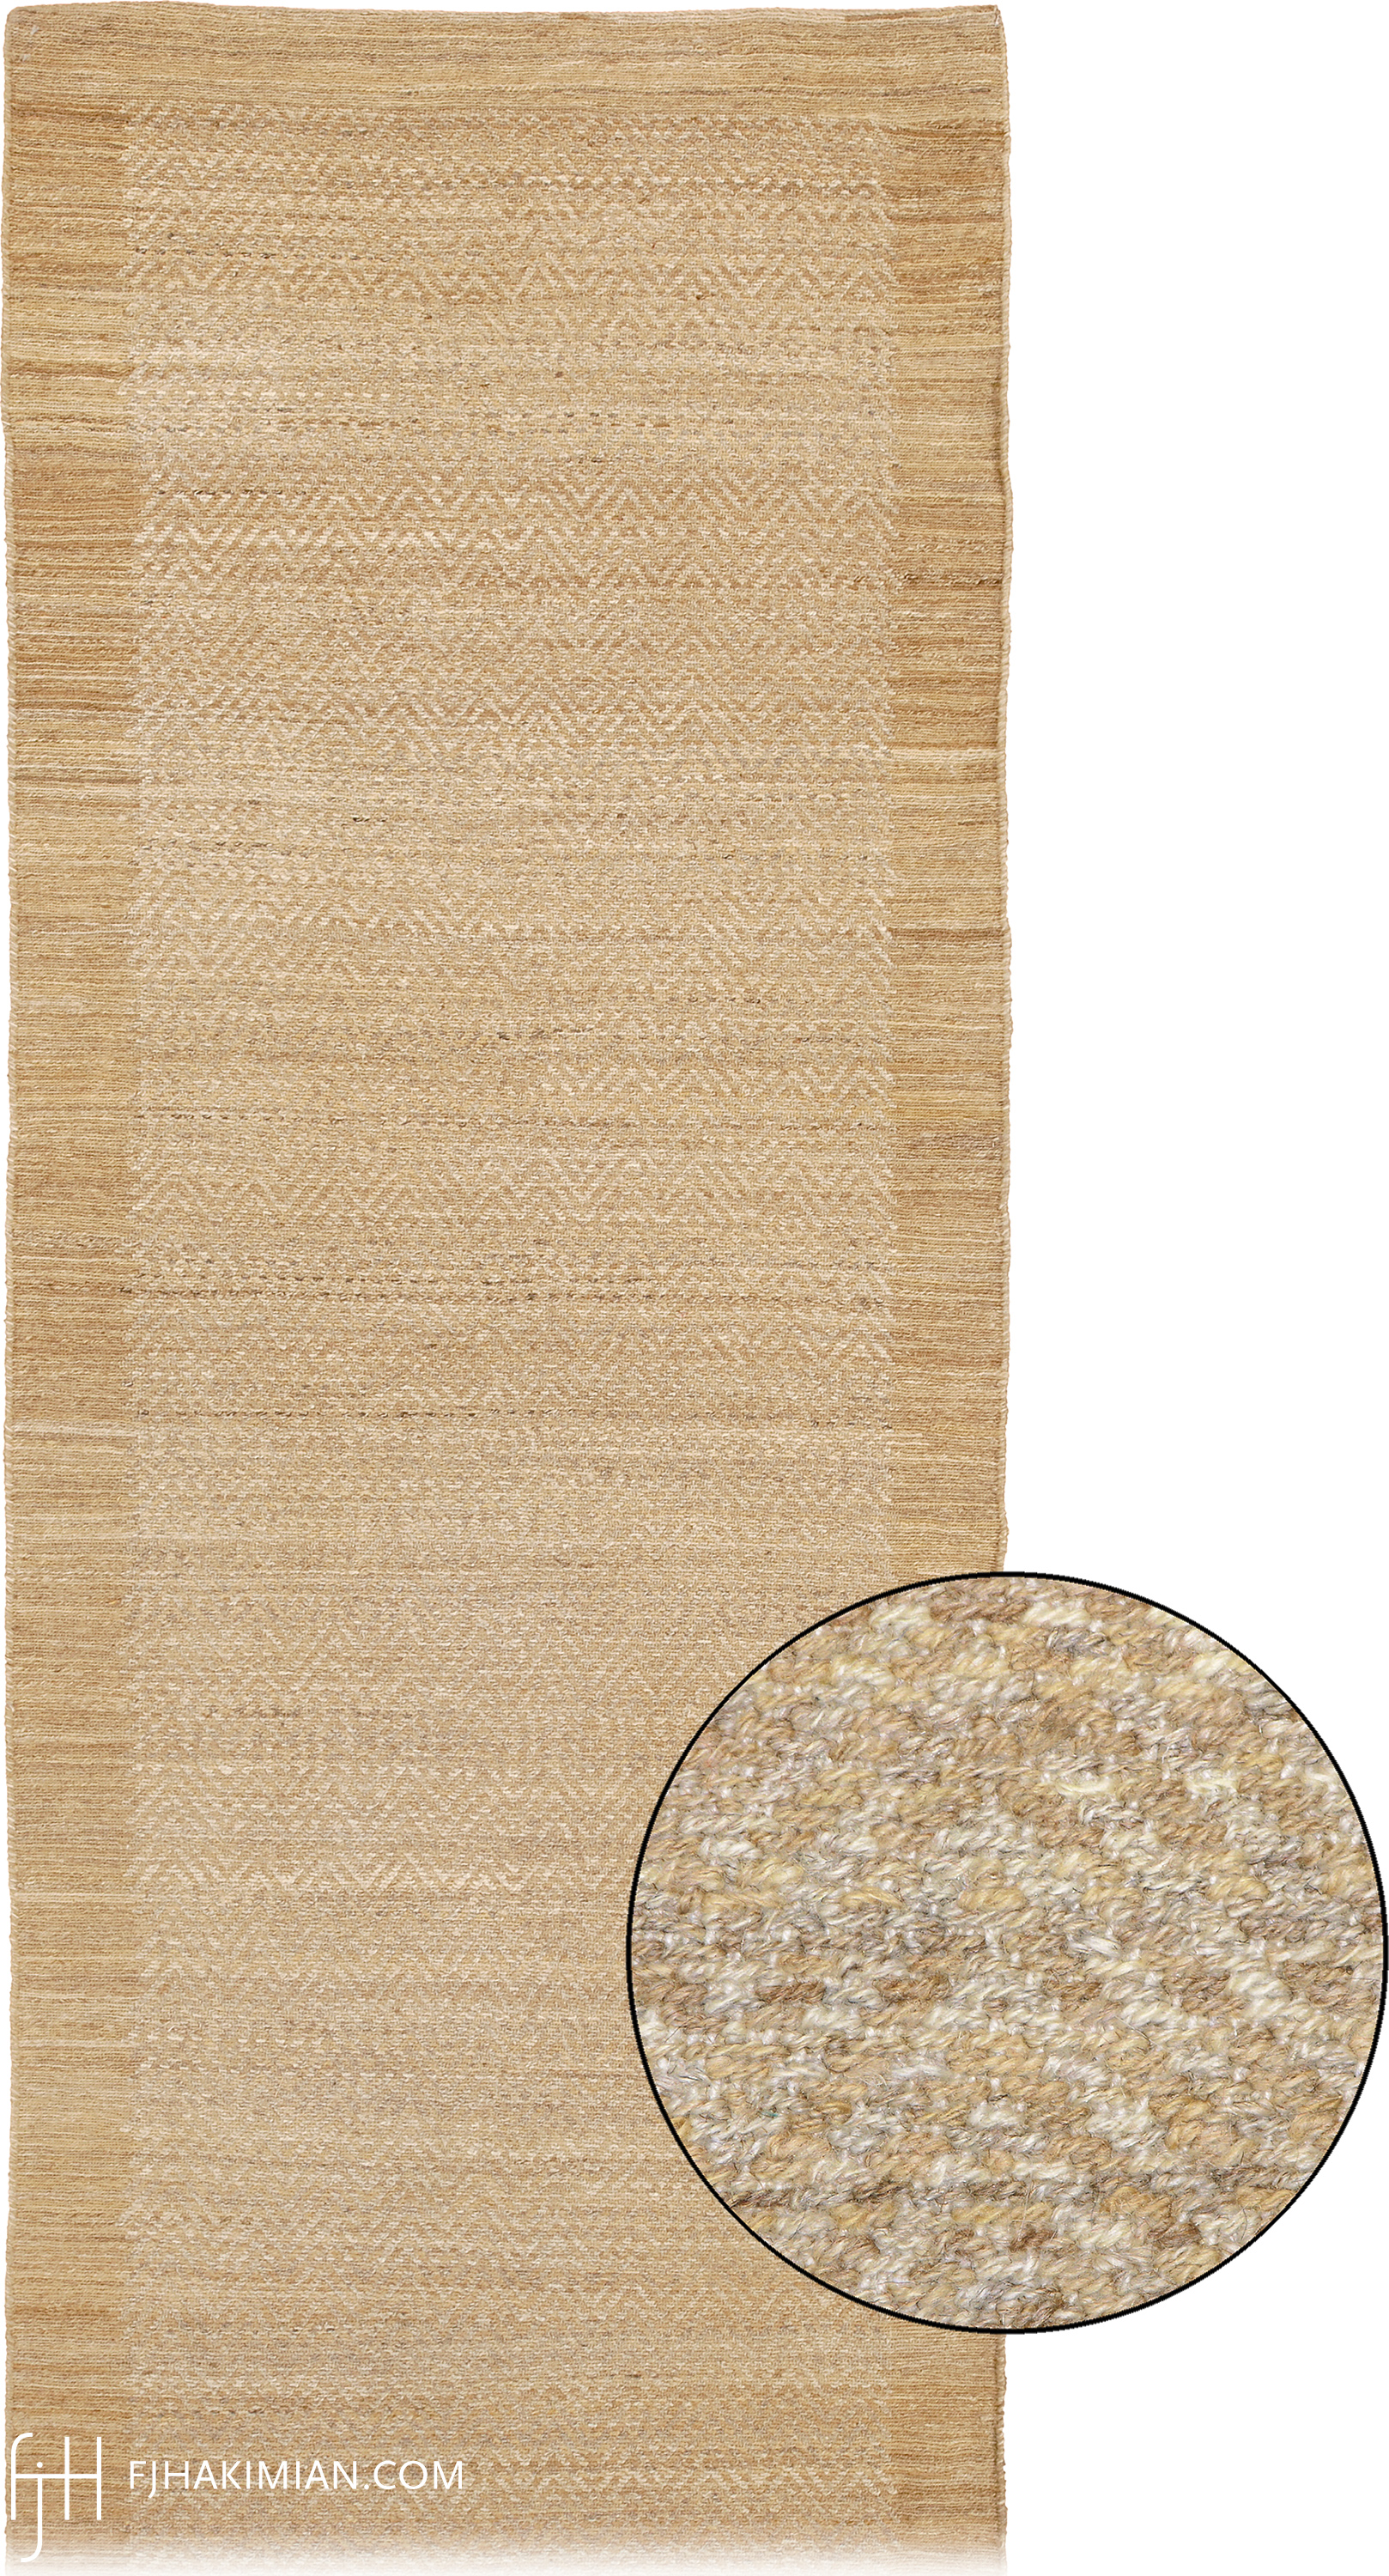 16336 Soumak Runner Design | Custom Soumak Carpet | FJ Hakimian | Carpet Gallery in NY